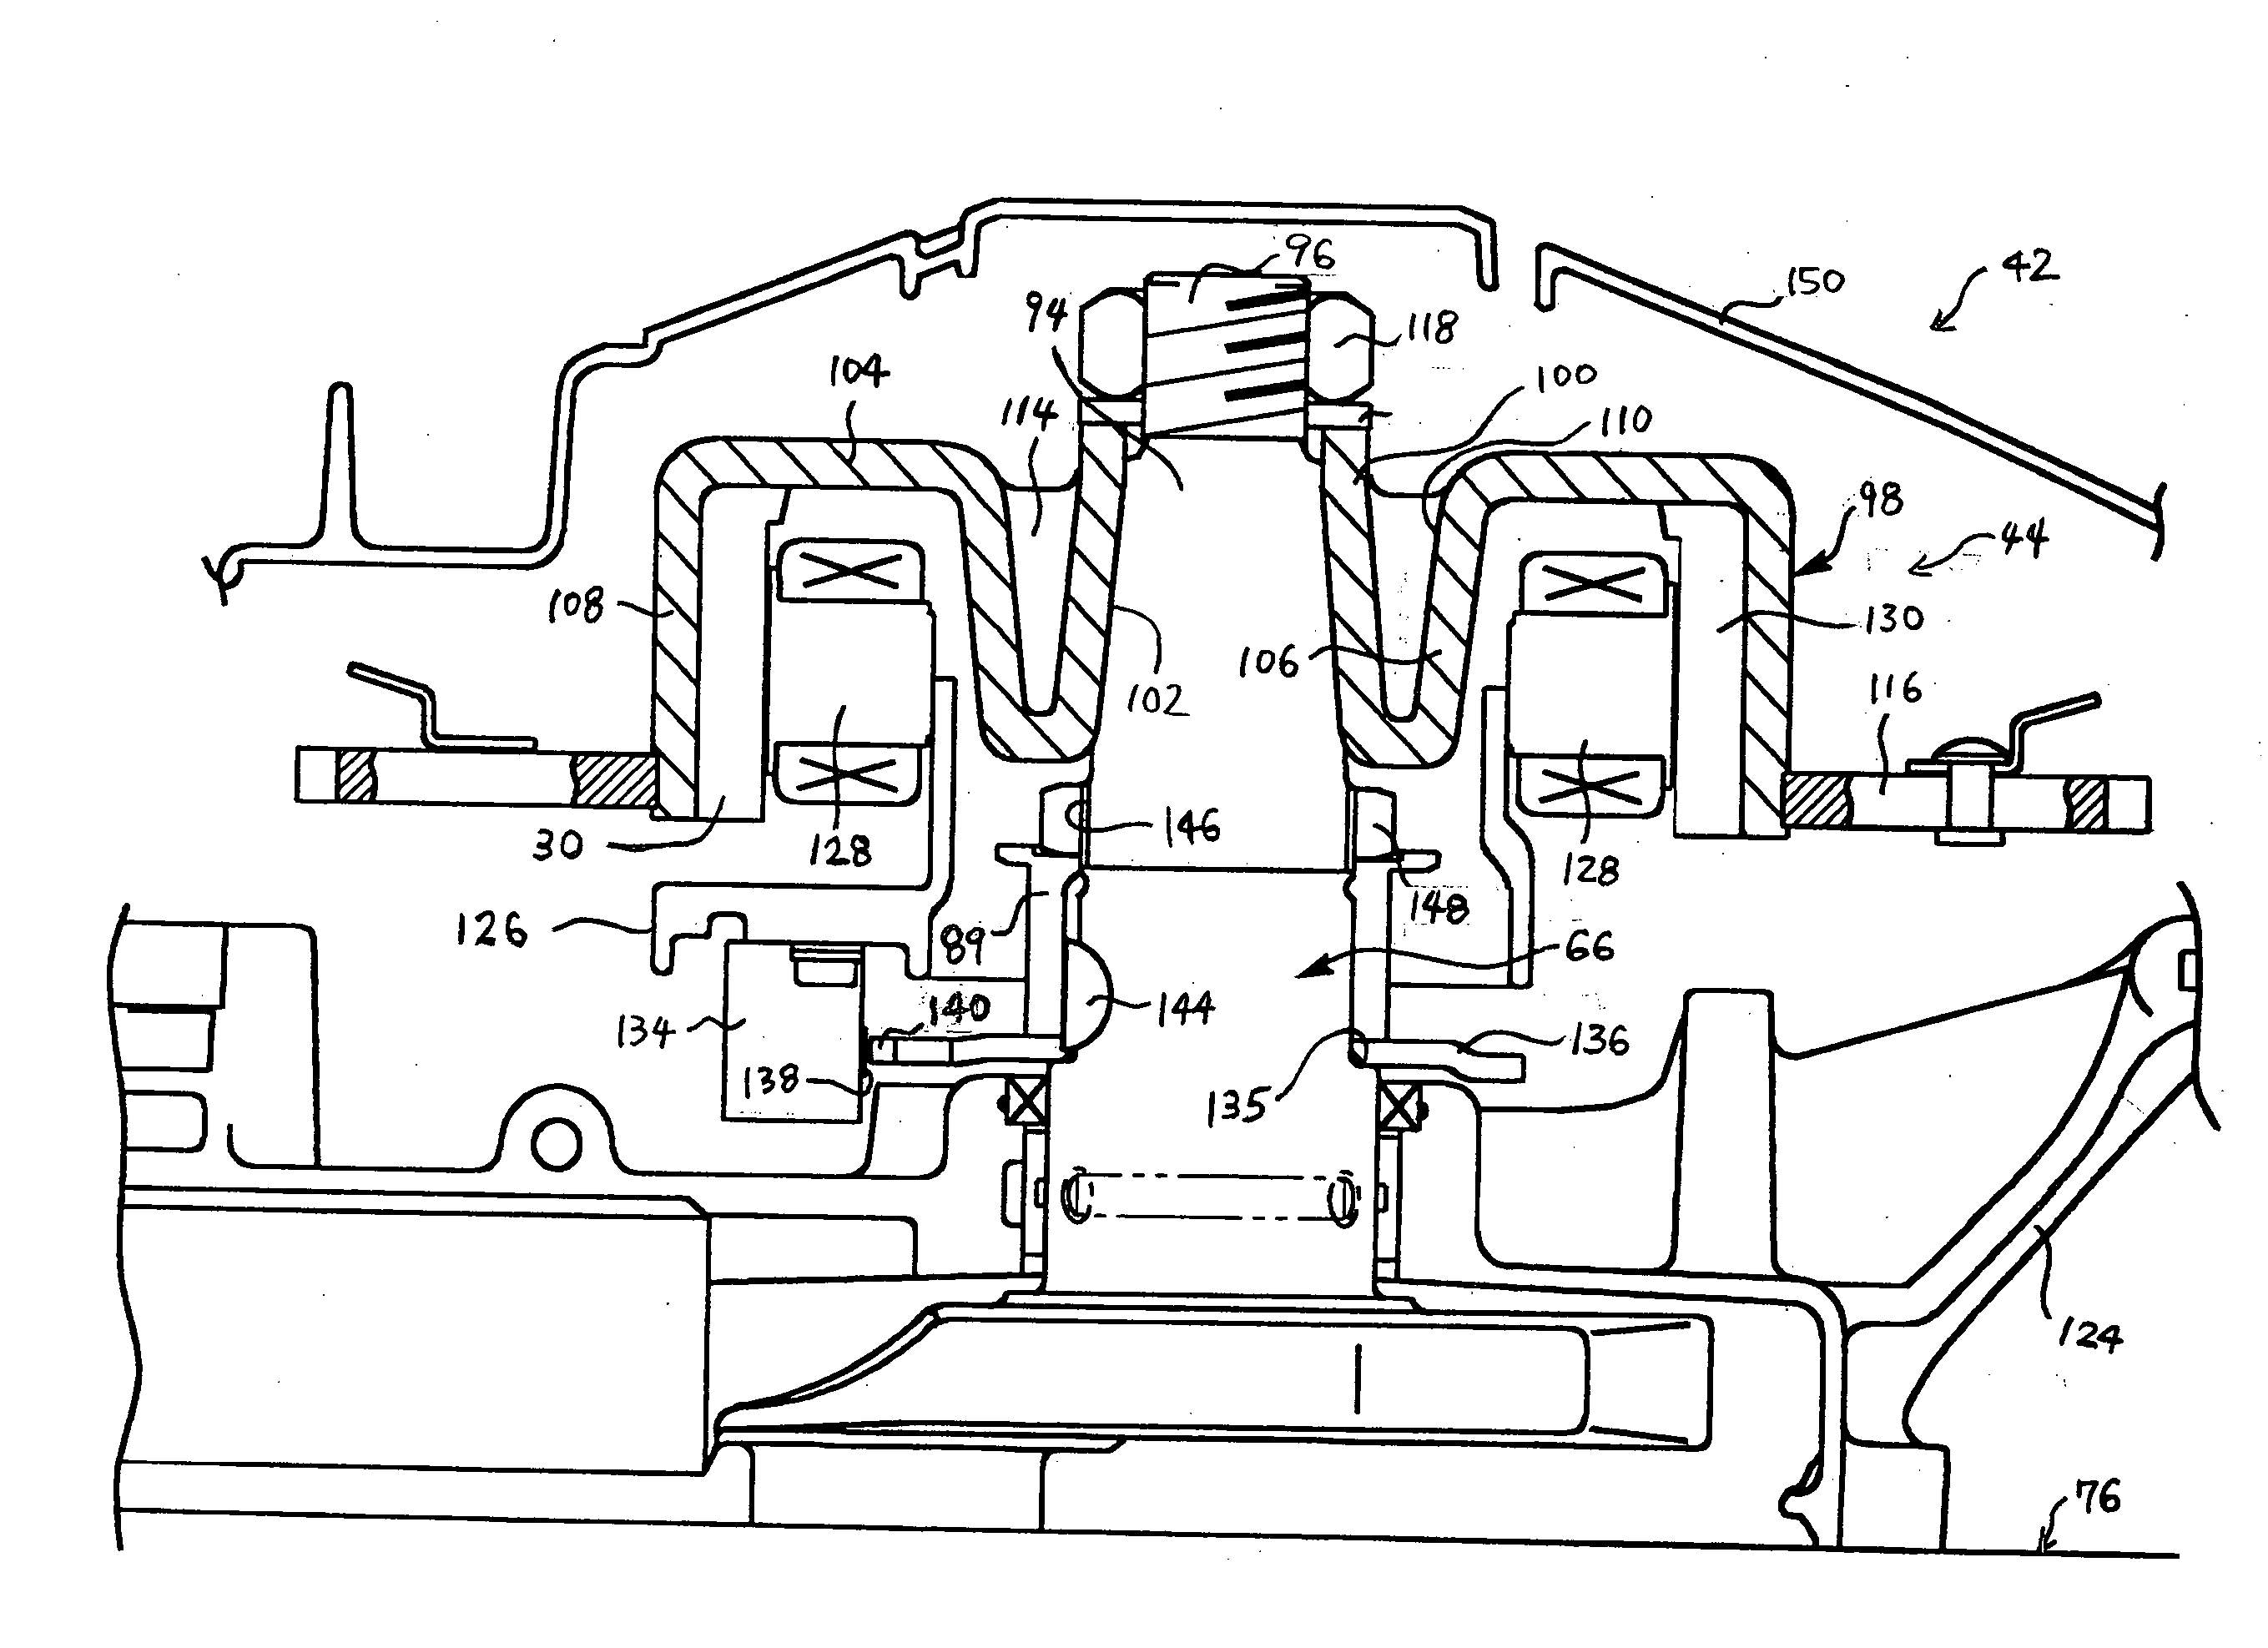 Flywheel arrangement for engine